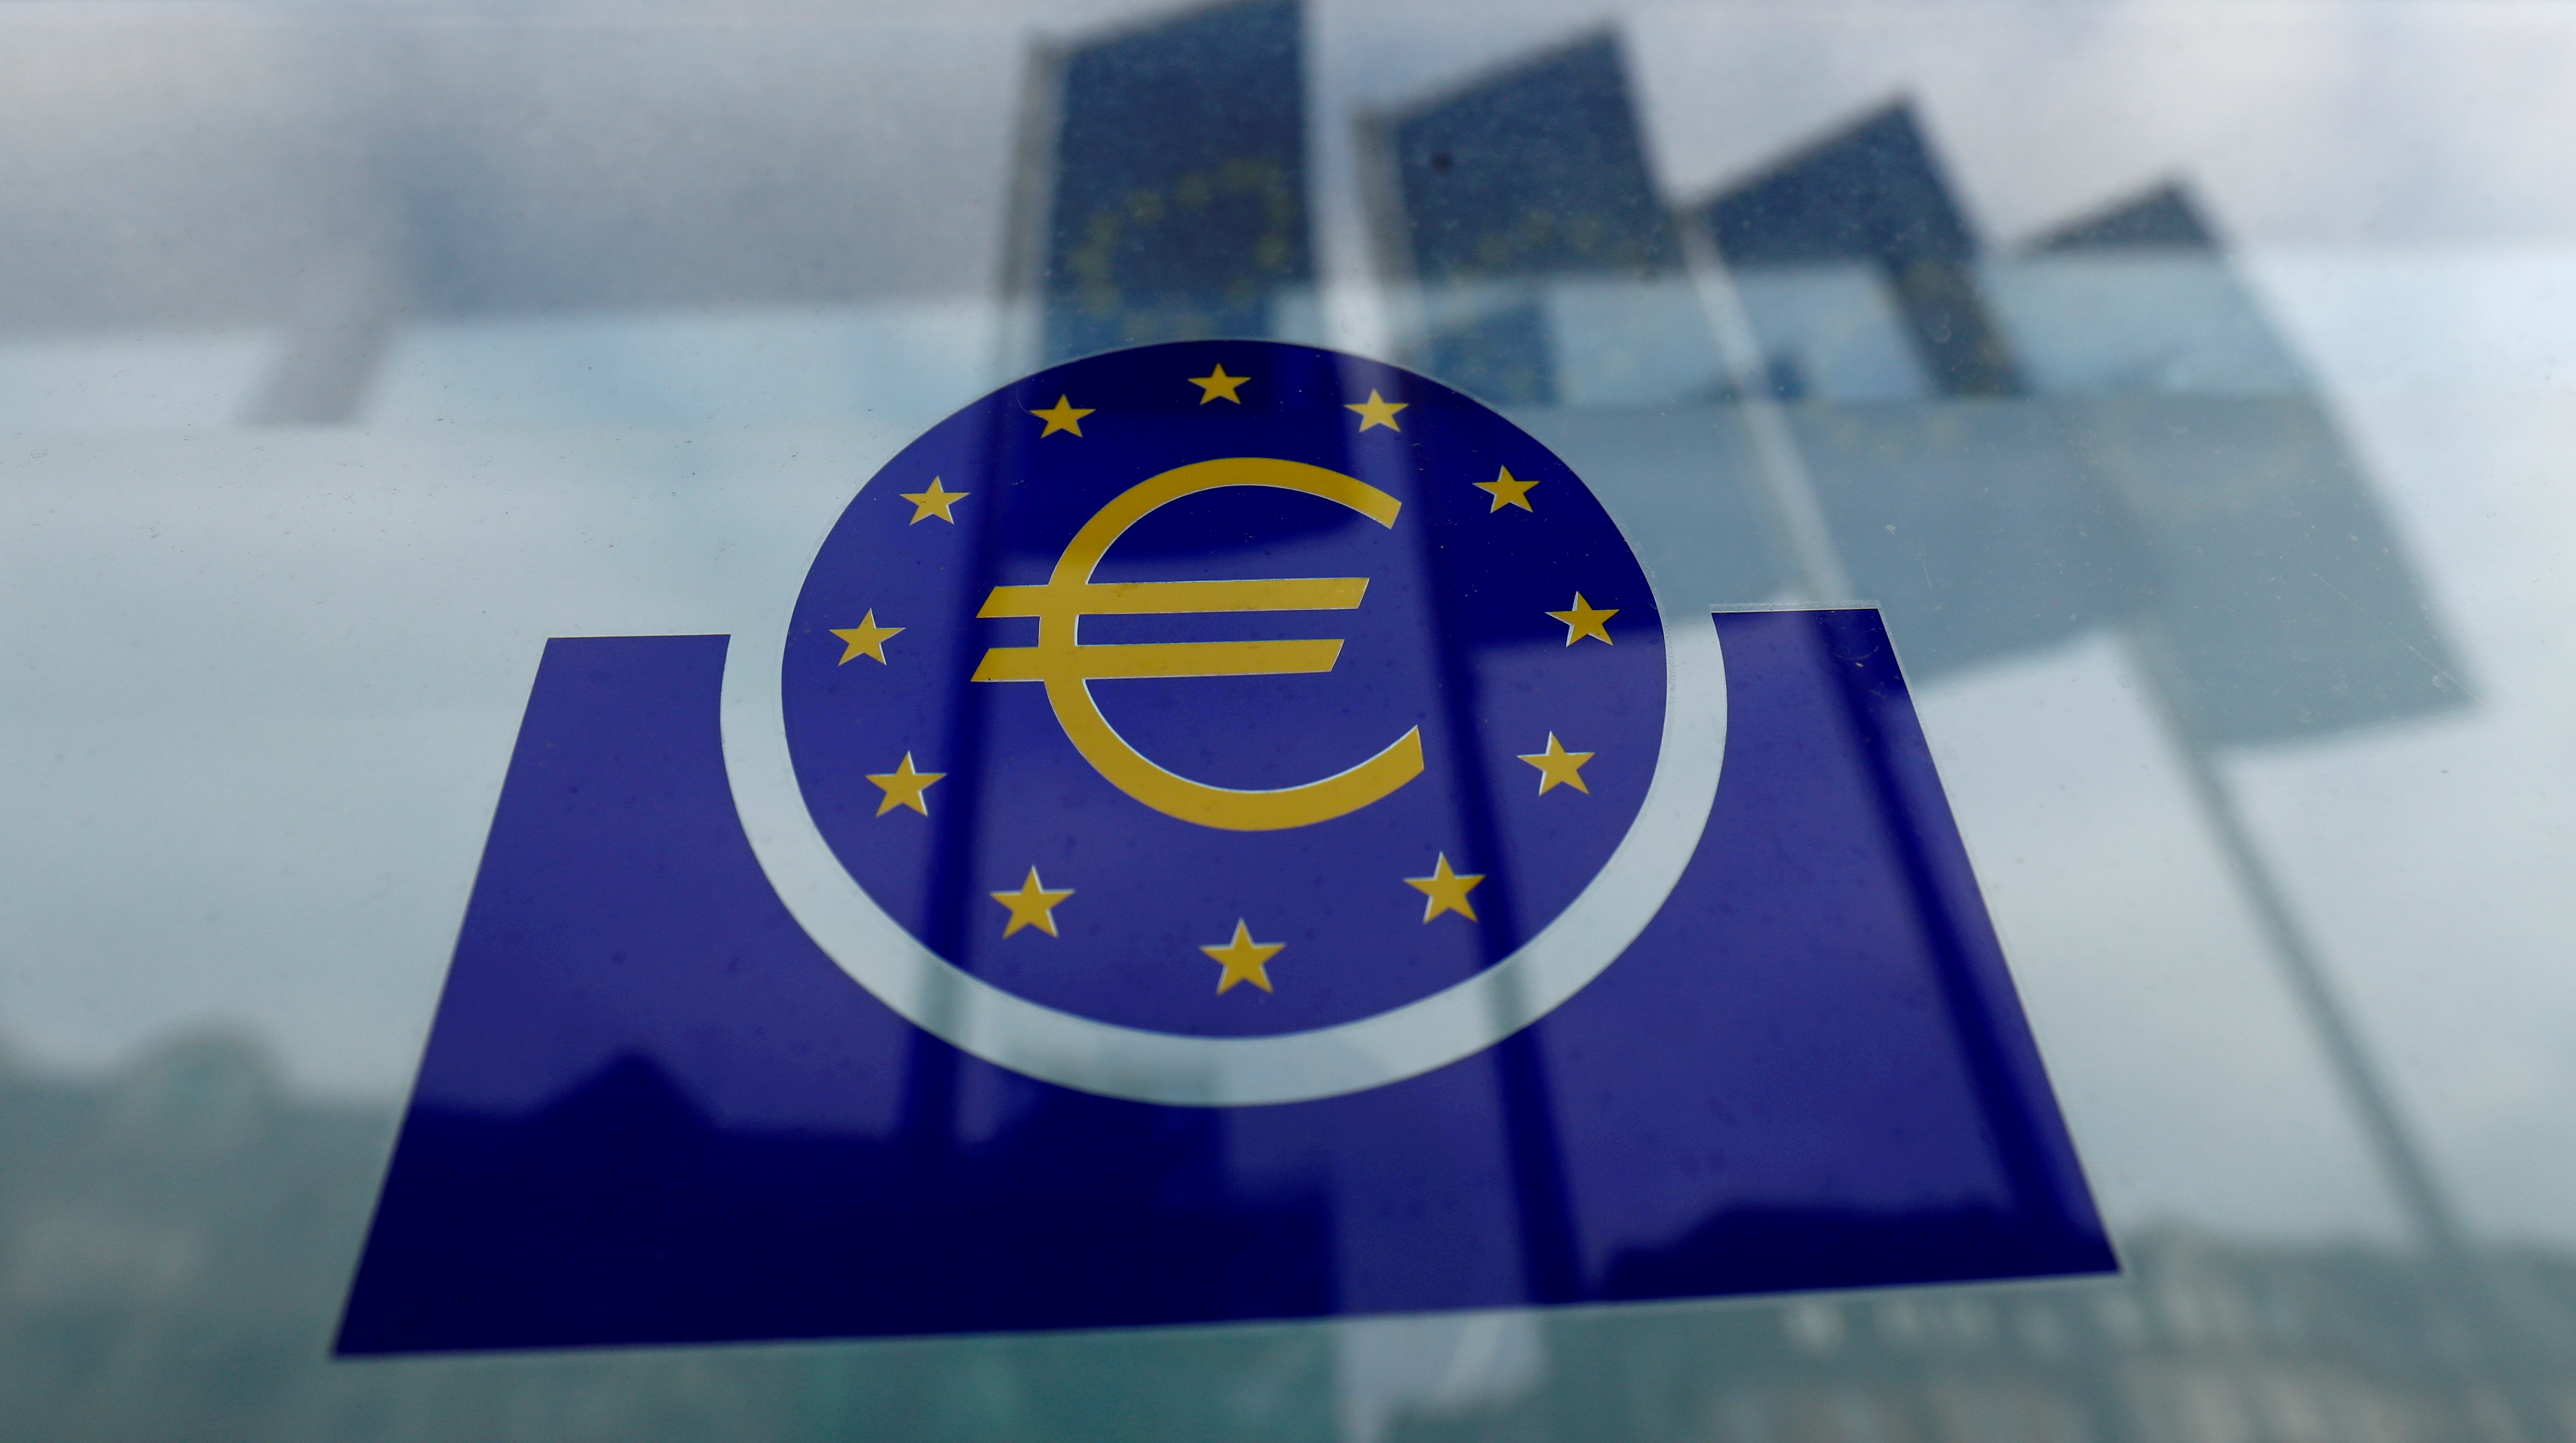 The European Central Bank (ECB) logo in Frankfurt, Germany, January 23, 2020. REUTERS/Ralph Orlowski